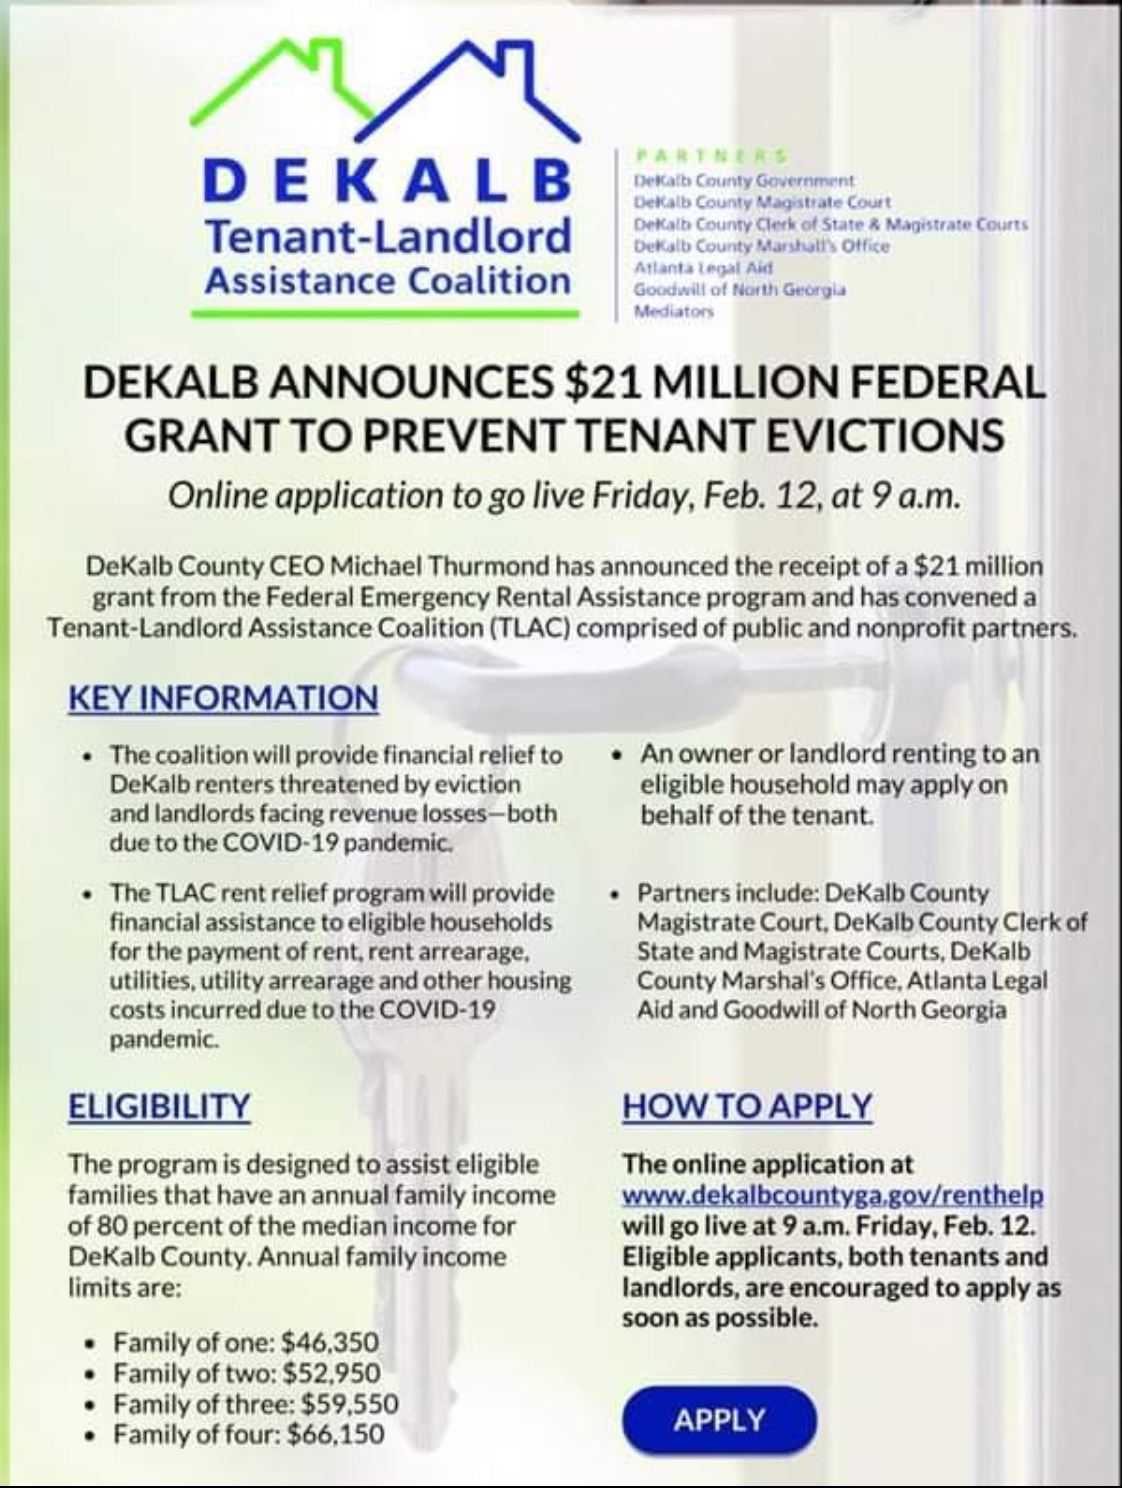 DeKalb Tenant-Landlord Assistance Coalition